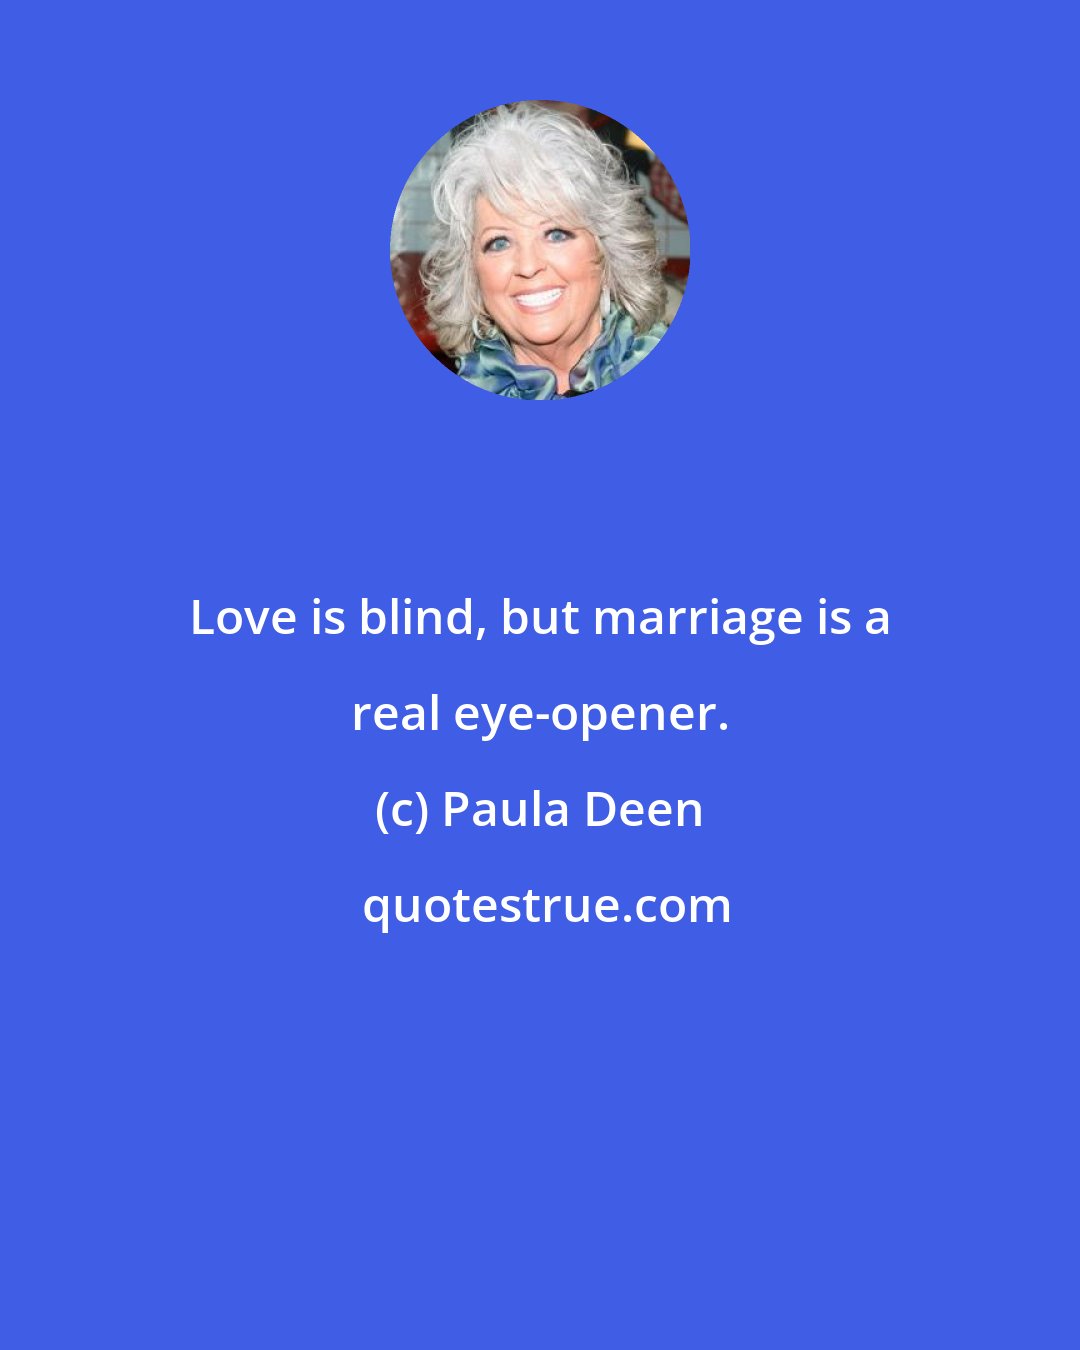 Paula Deen: Love is blind, but marriage is a real eye-opener.